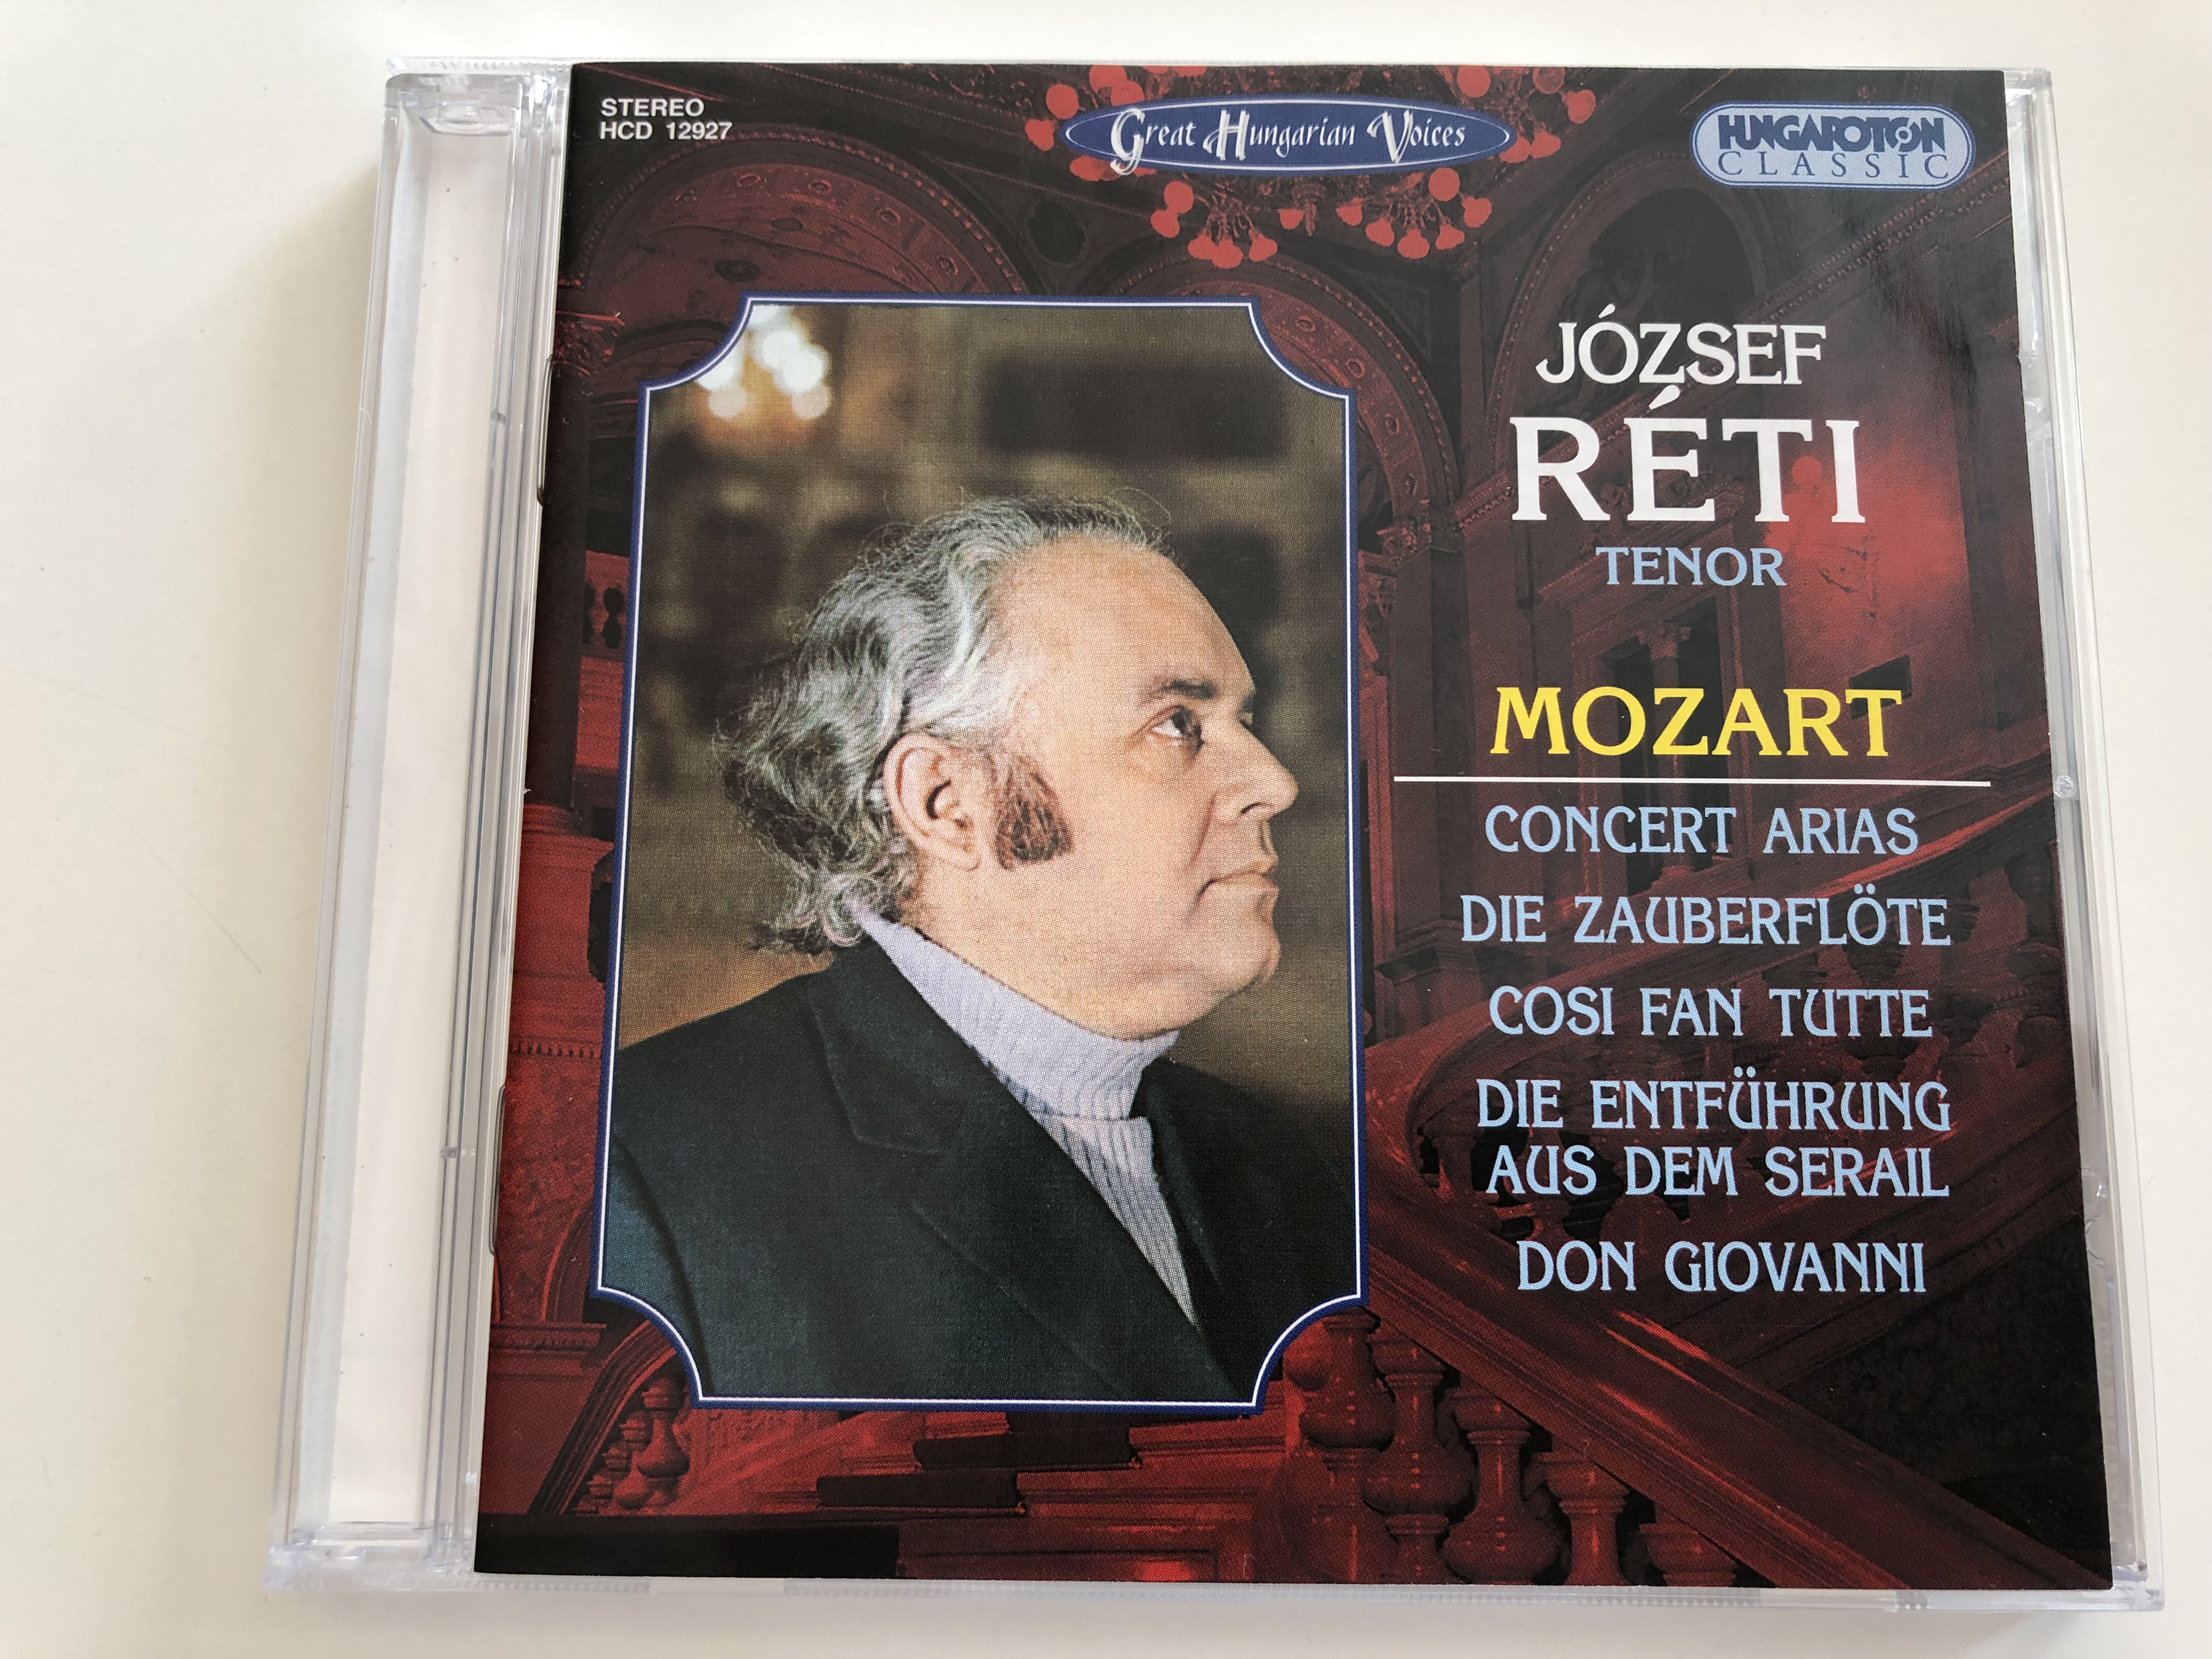 j-zsef-r-ti-tenor-mozart-concert-arias-die-zauberfl-te-cosi-fan-tutte-die-entf-hrunk-aus-dem-serail-don-giovanni-great-hungarian-voices-hungaroton-classic-audio-cd-1996-hcd-12927-2-.jpg